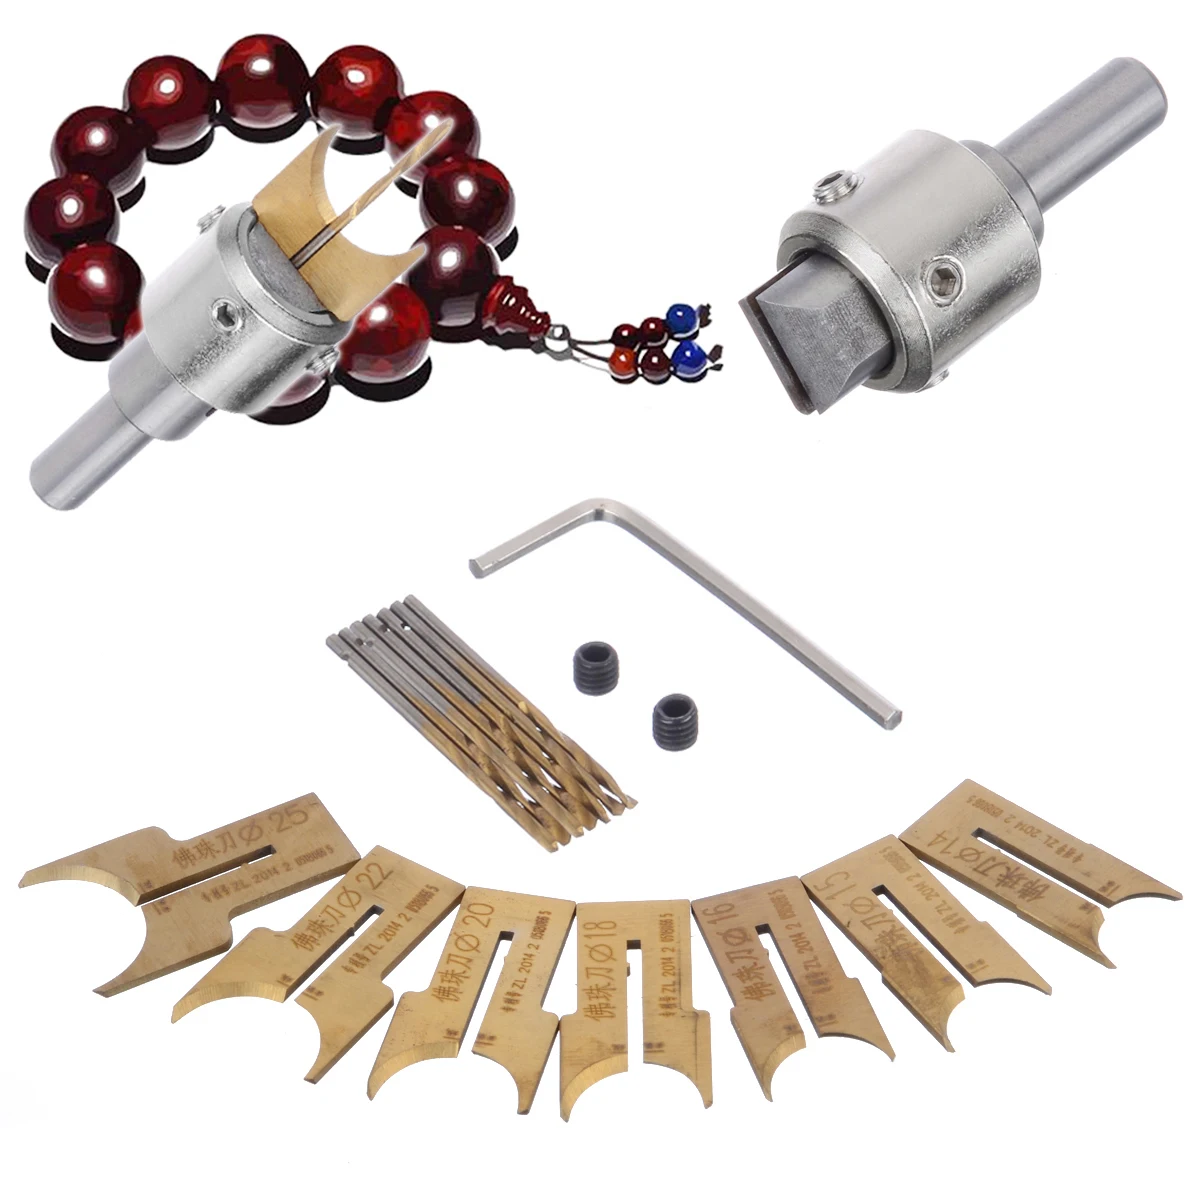 

16pcs Carbide Ball Bits Blade Woodworking Milling Cutter Molding Tool Buddha Beads Router Bit Drills Set 14-25mm